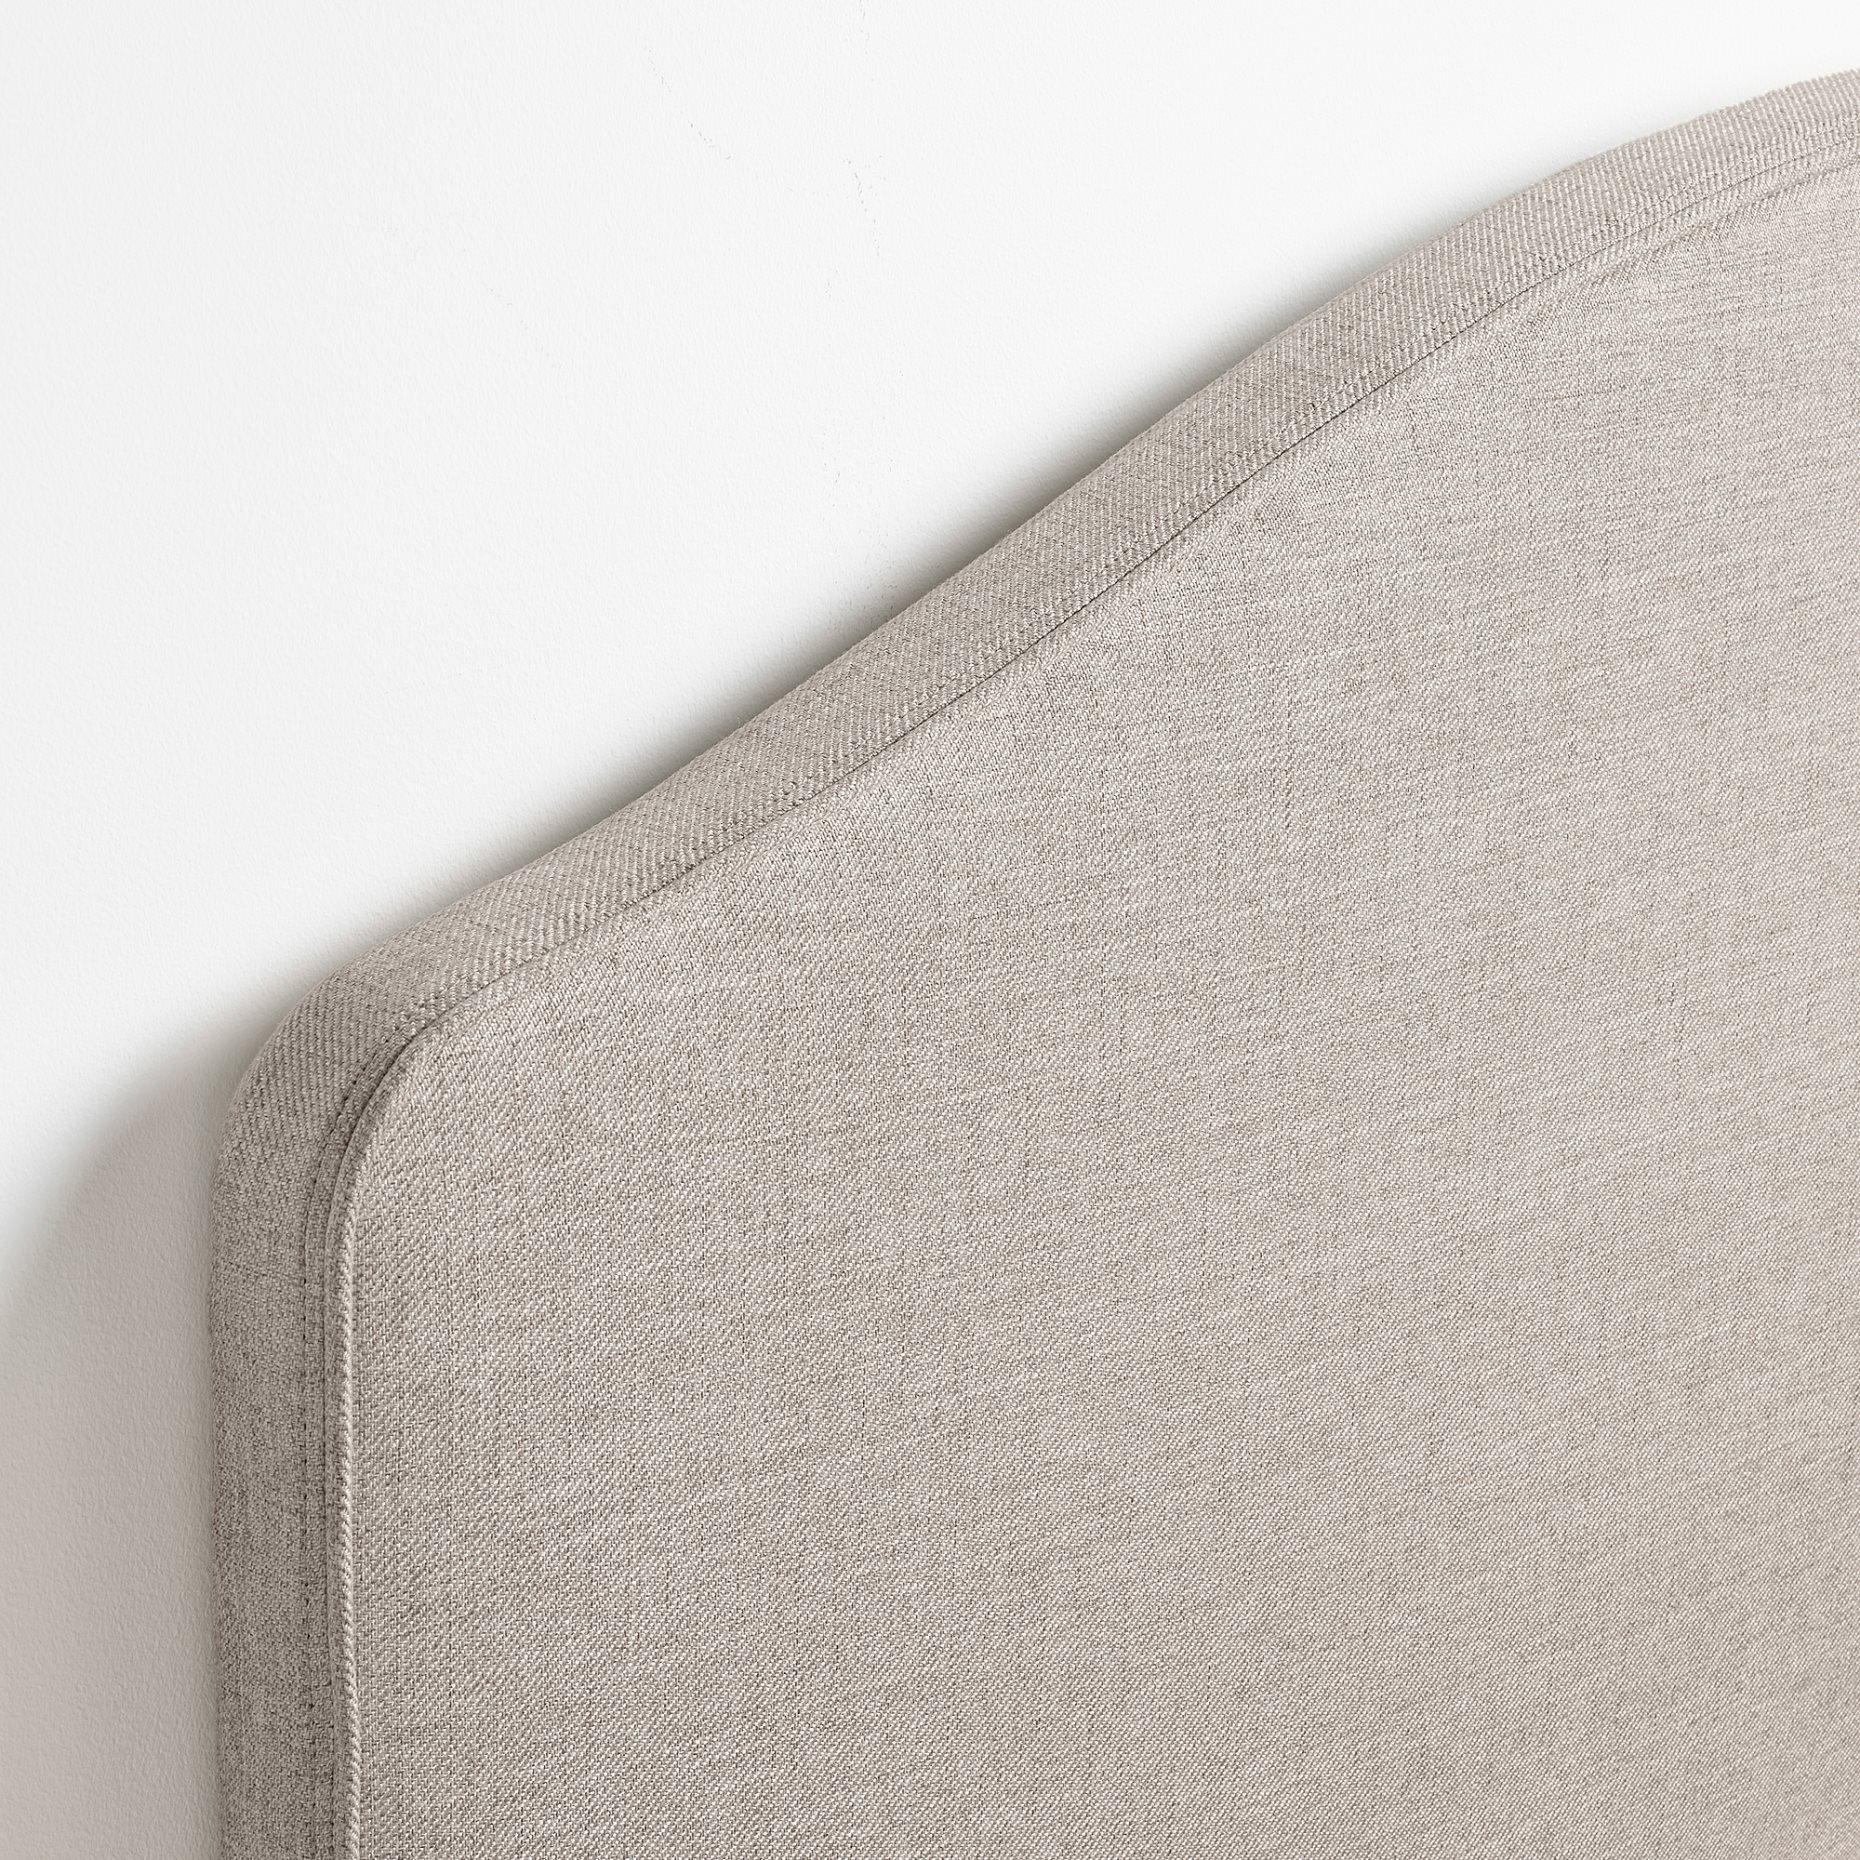 RAMNEFJALL, upholstered bed frame, 140x200 cm, 795.601.59